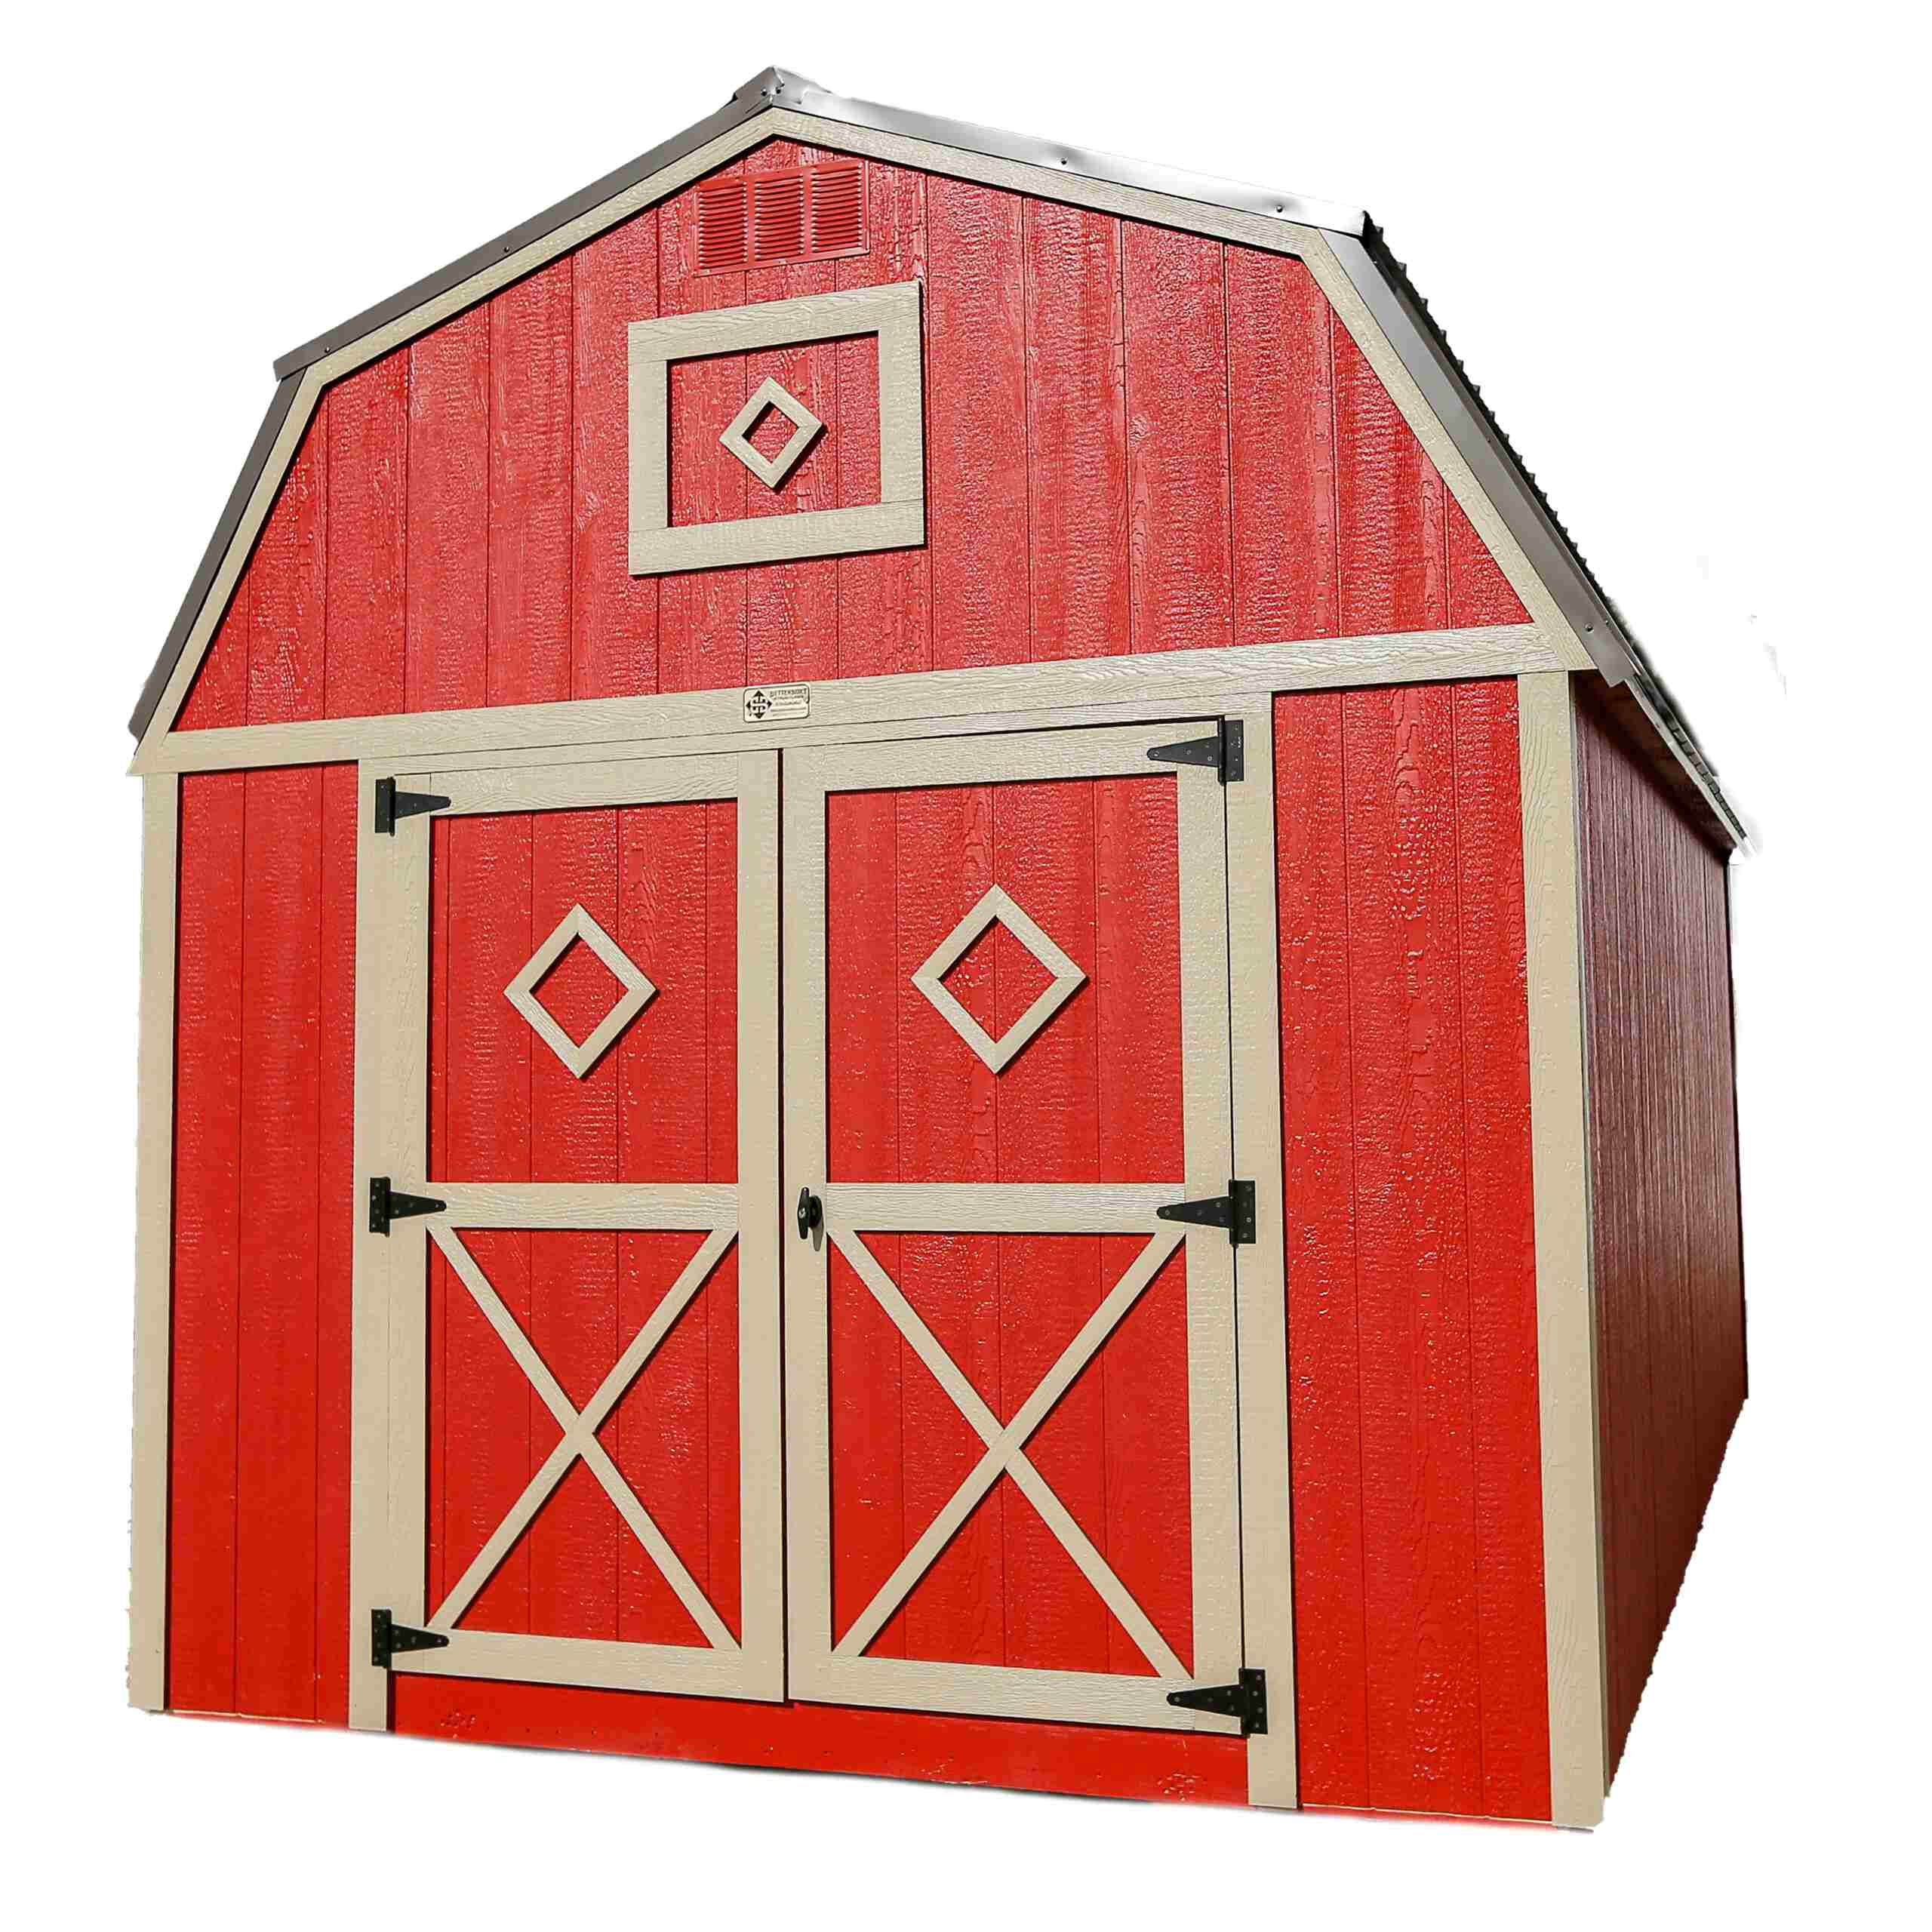 Better Built Lofted Barn